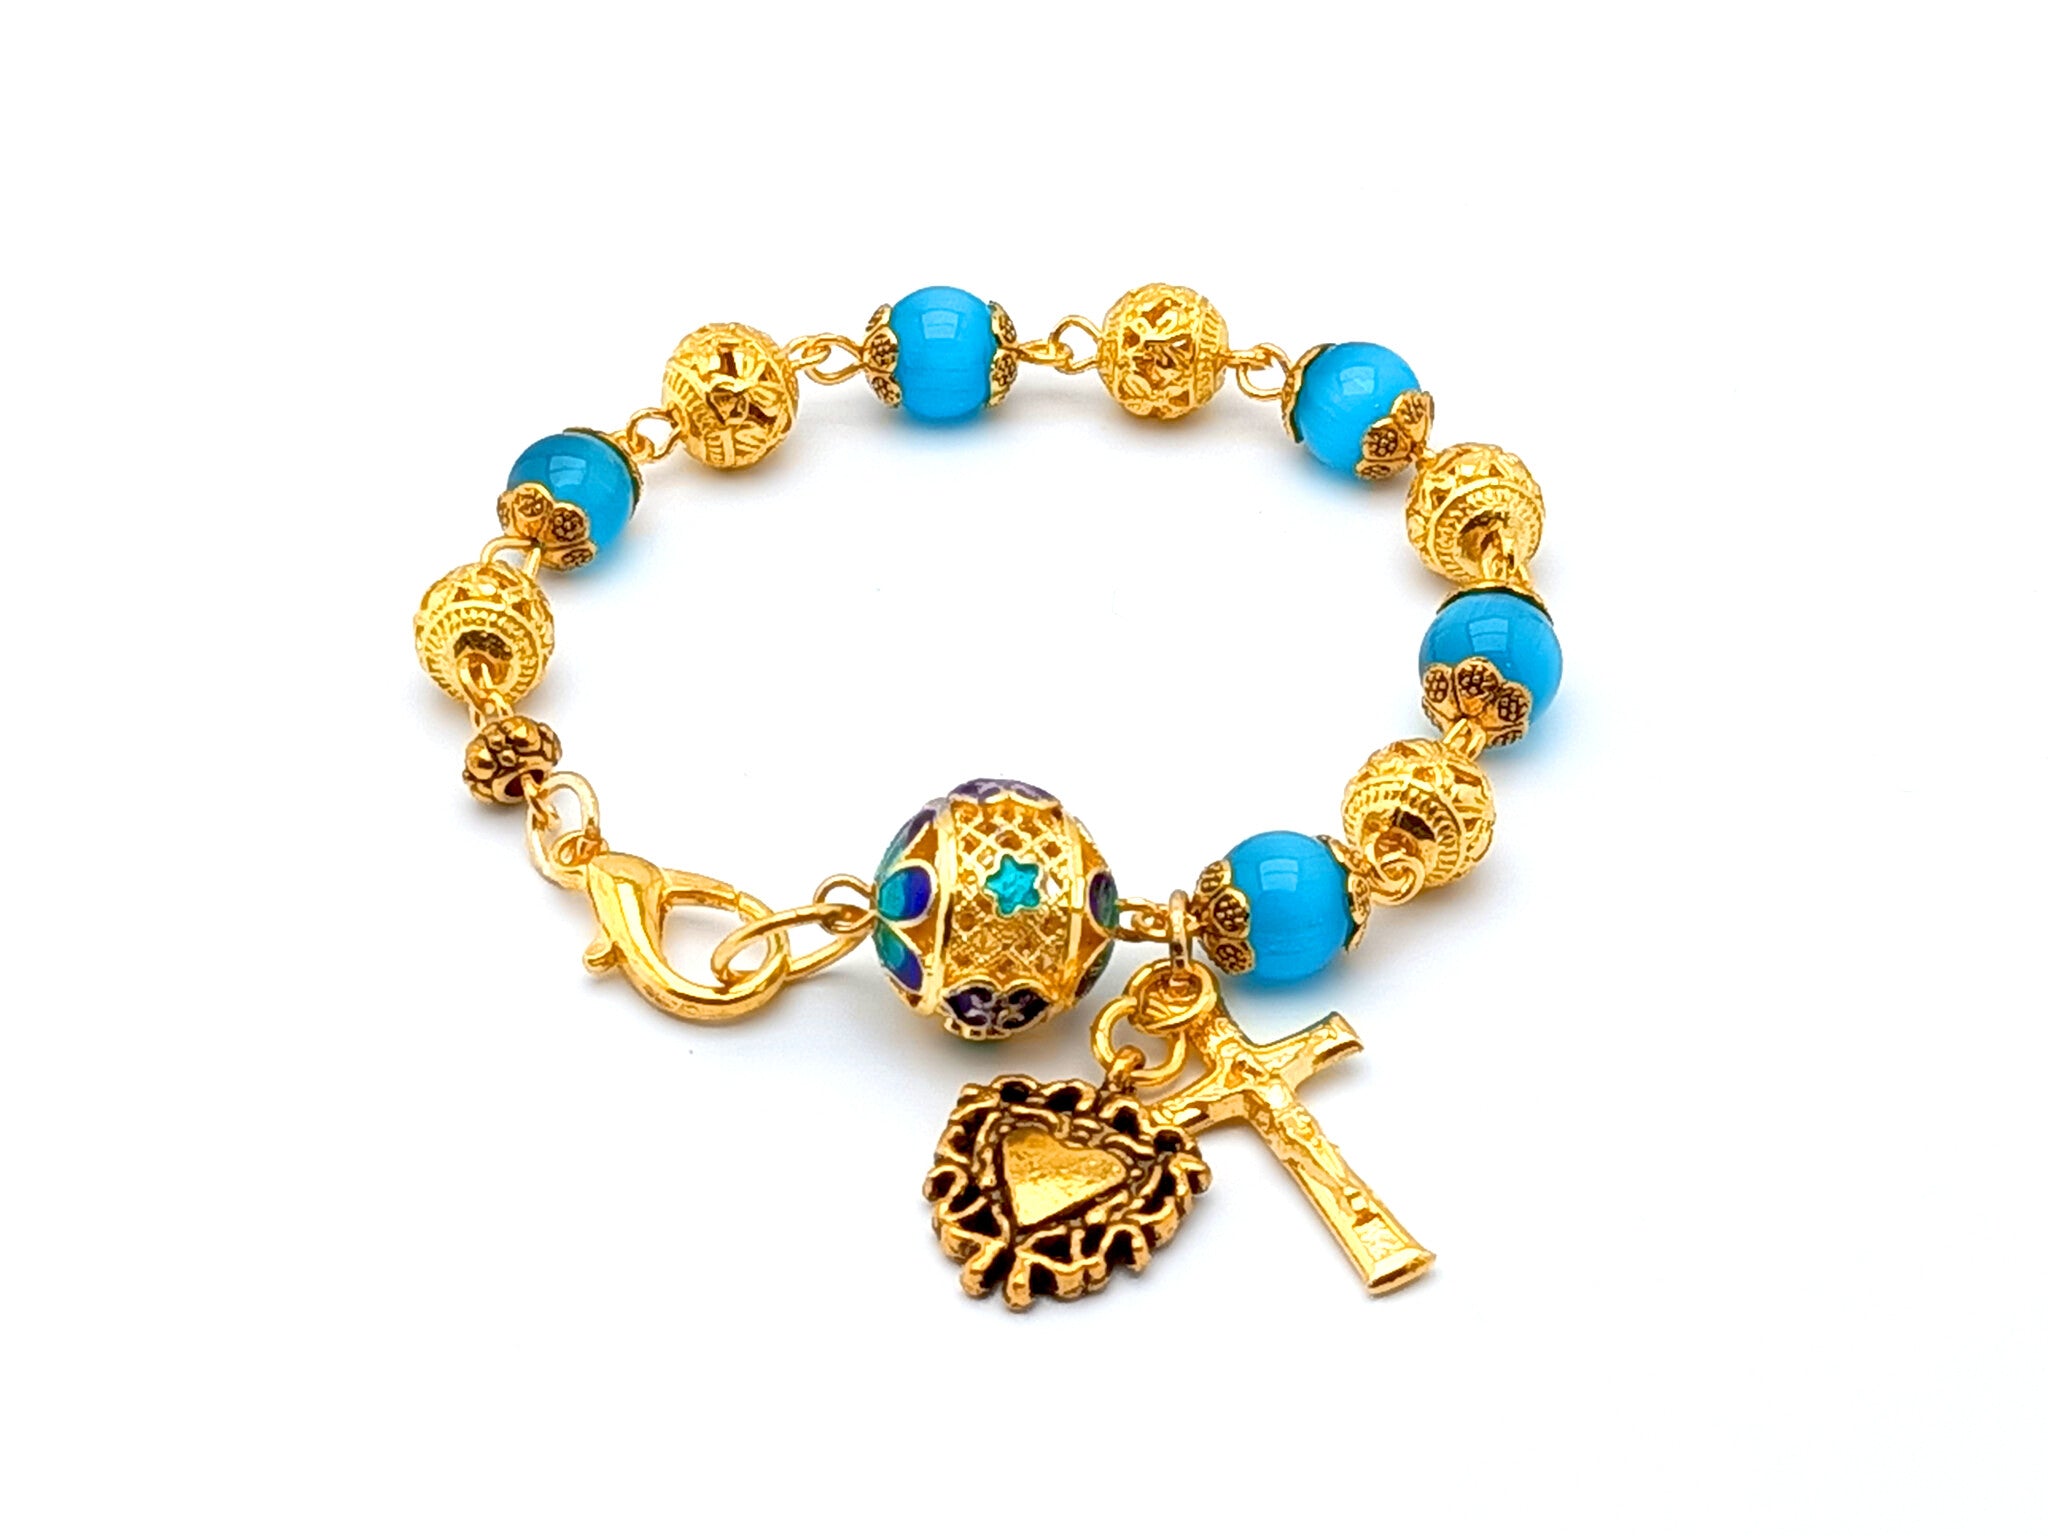 18KT Yellow Gold Diamond Cut Rosary Bracelet